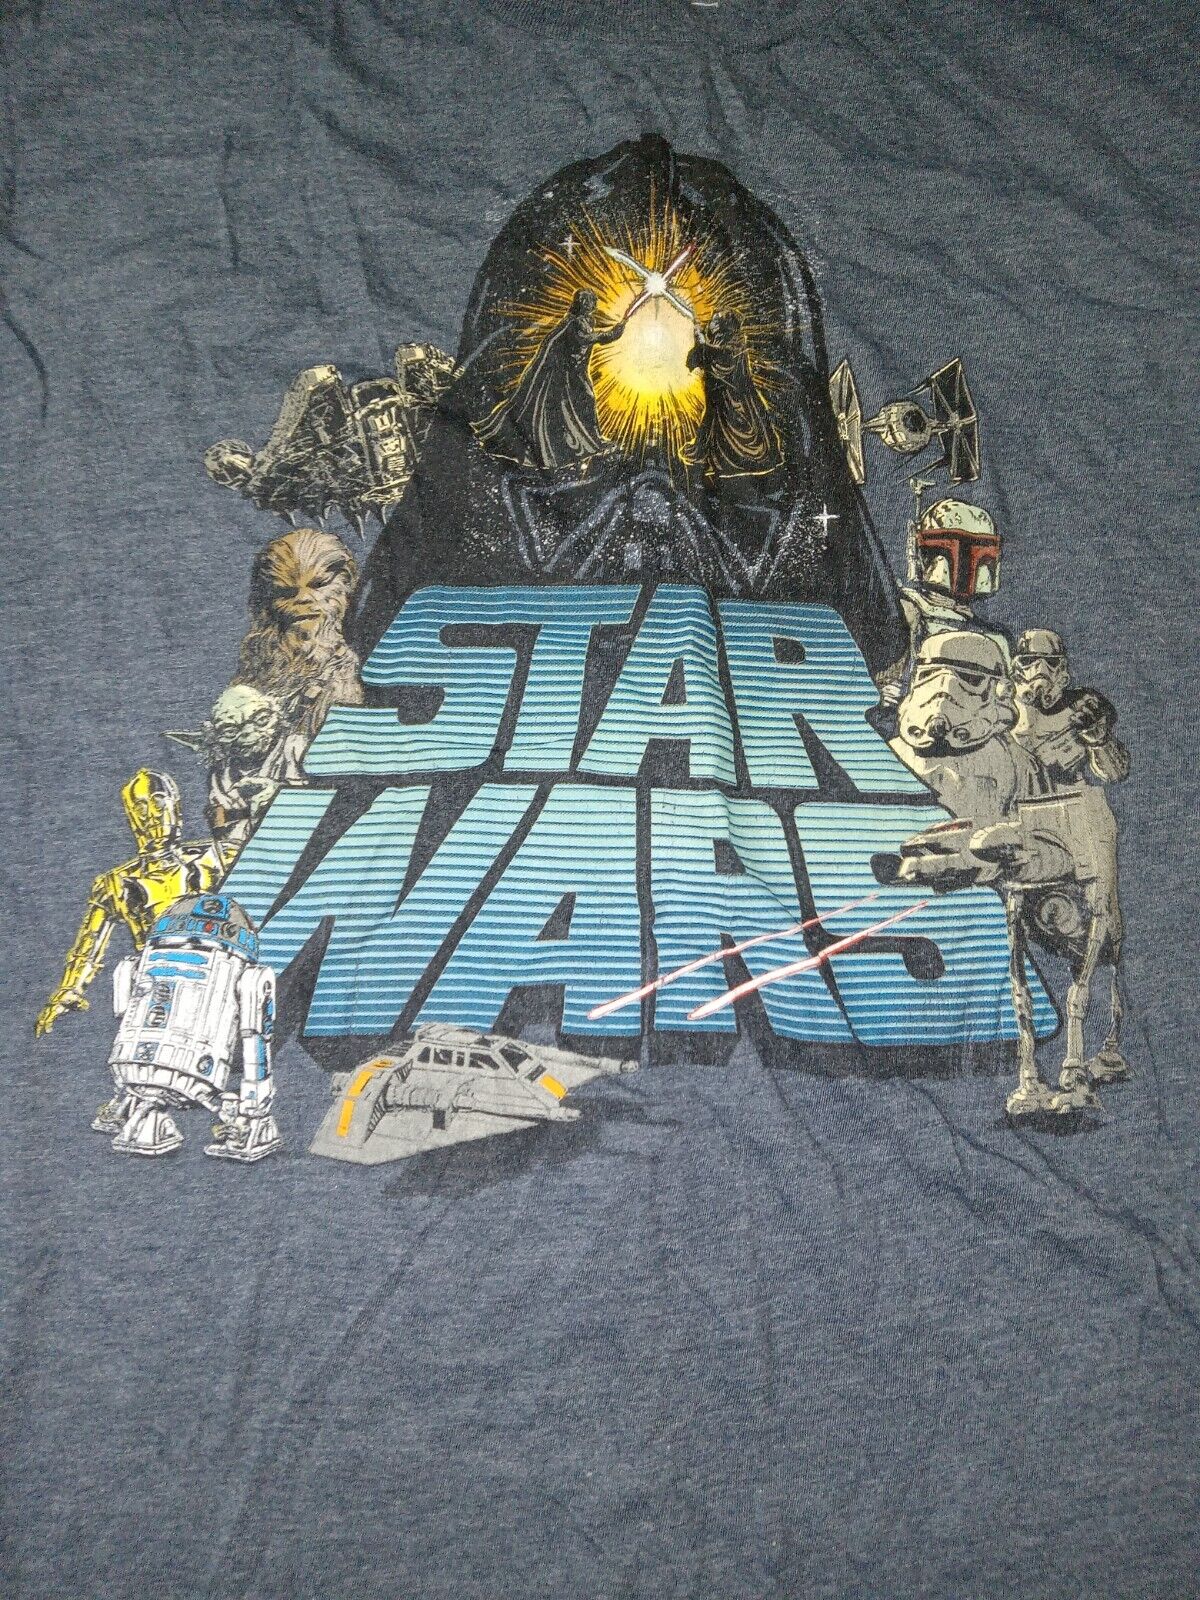 Star Wars Blue T Shirt Men's XL Darth Vader Yoda R2D2 C3PO Mad Engine